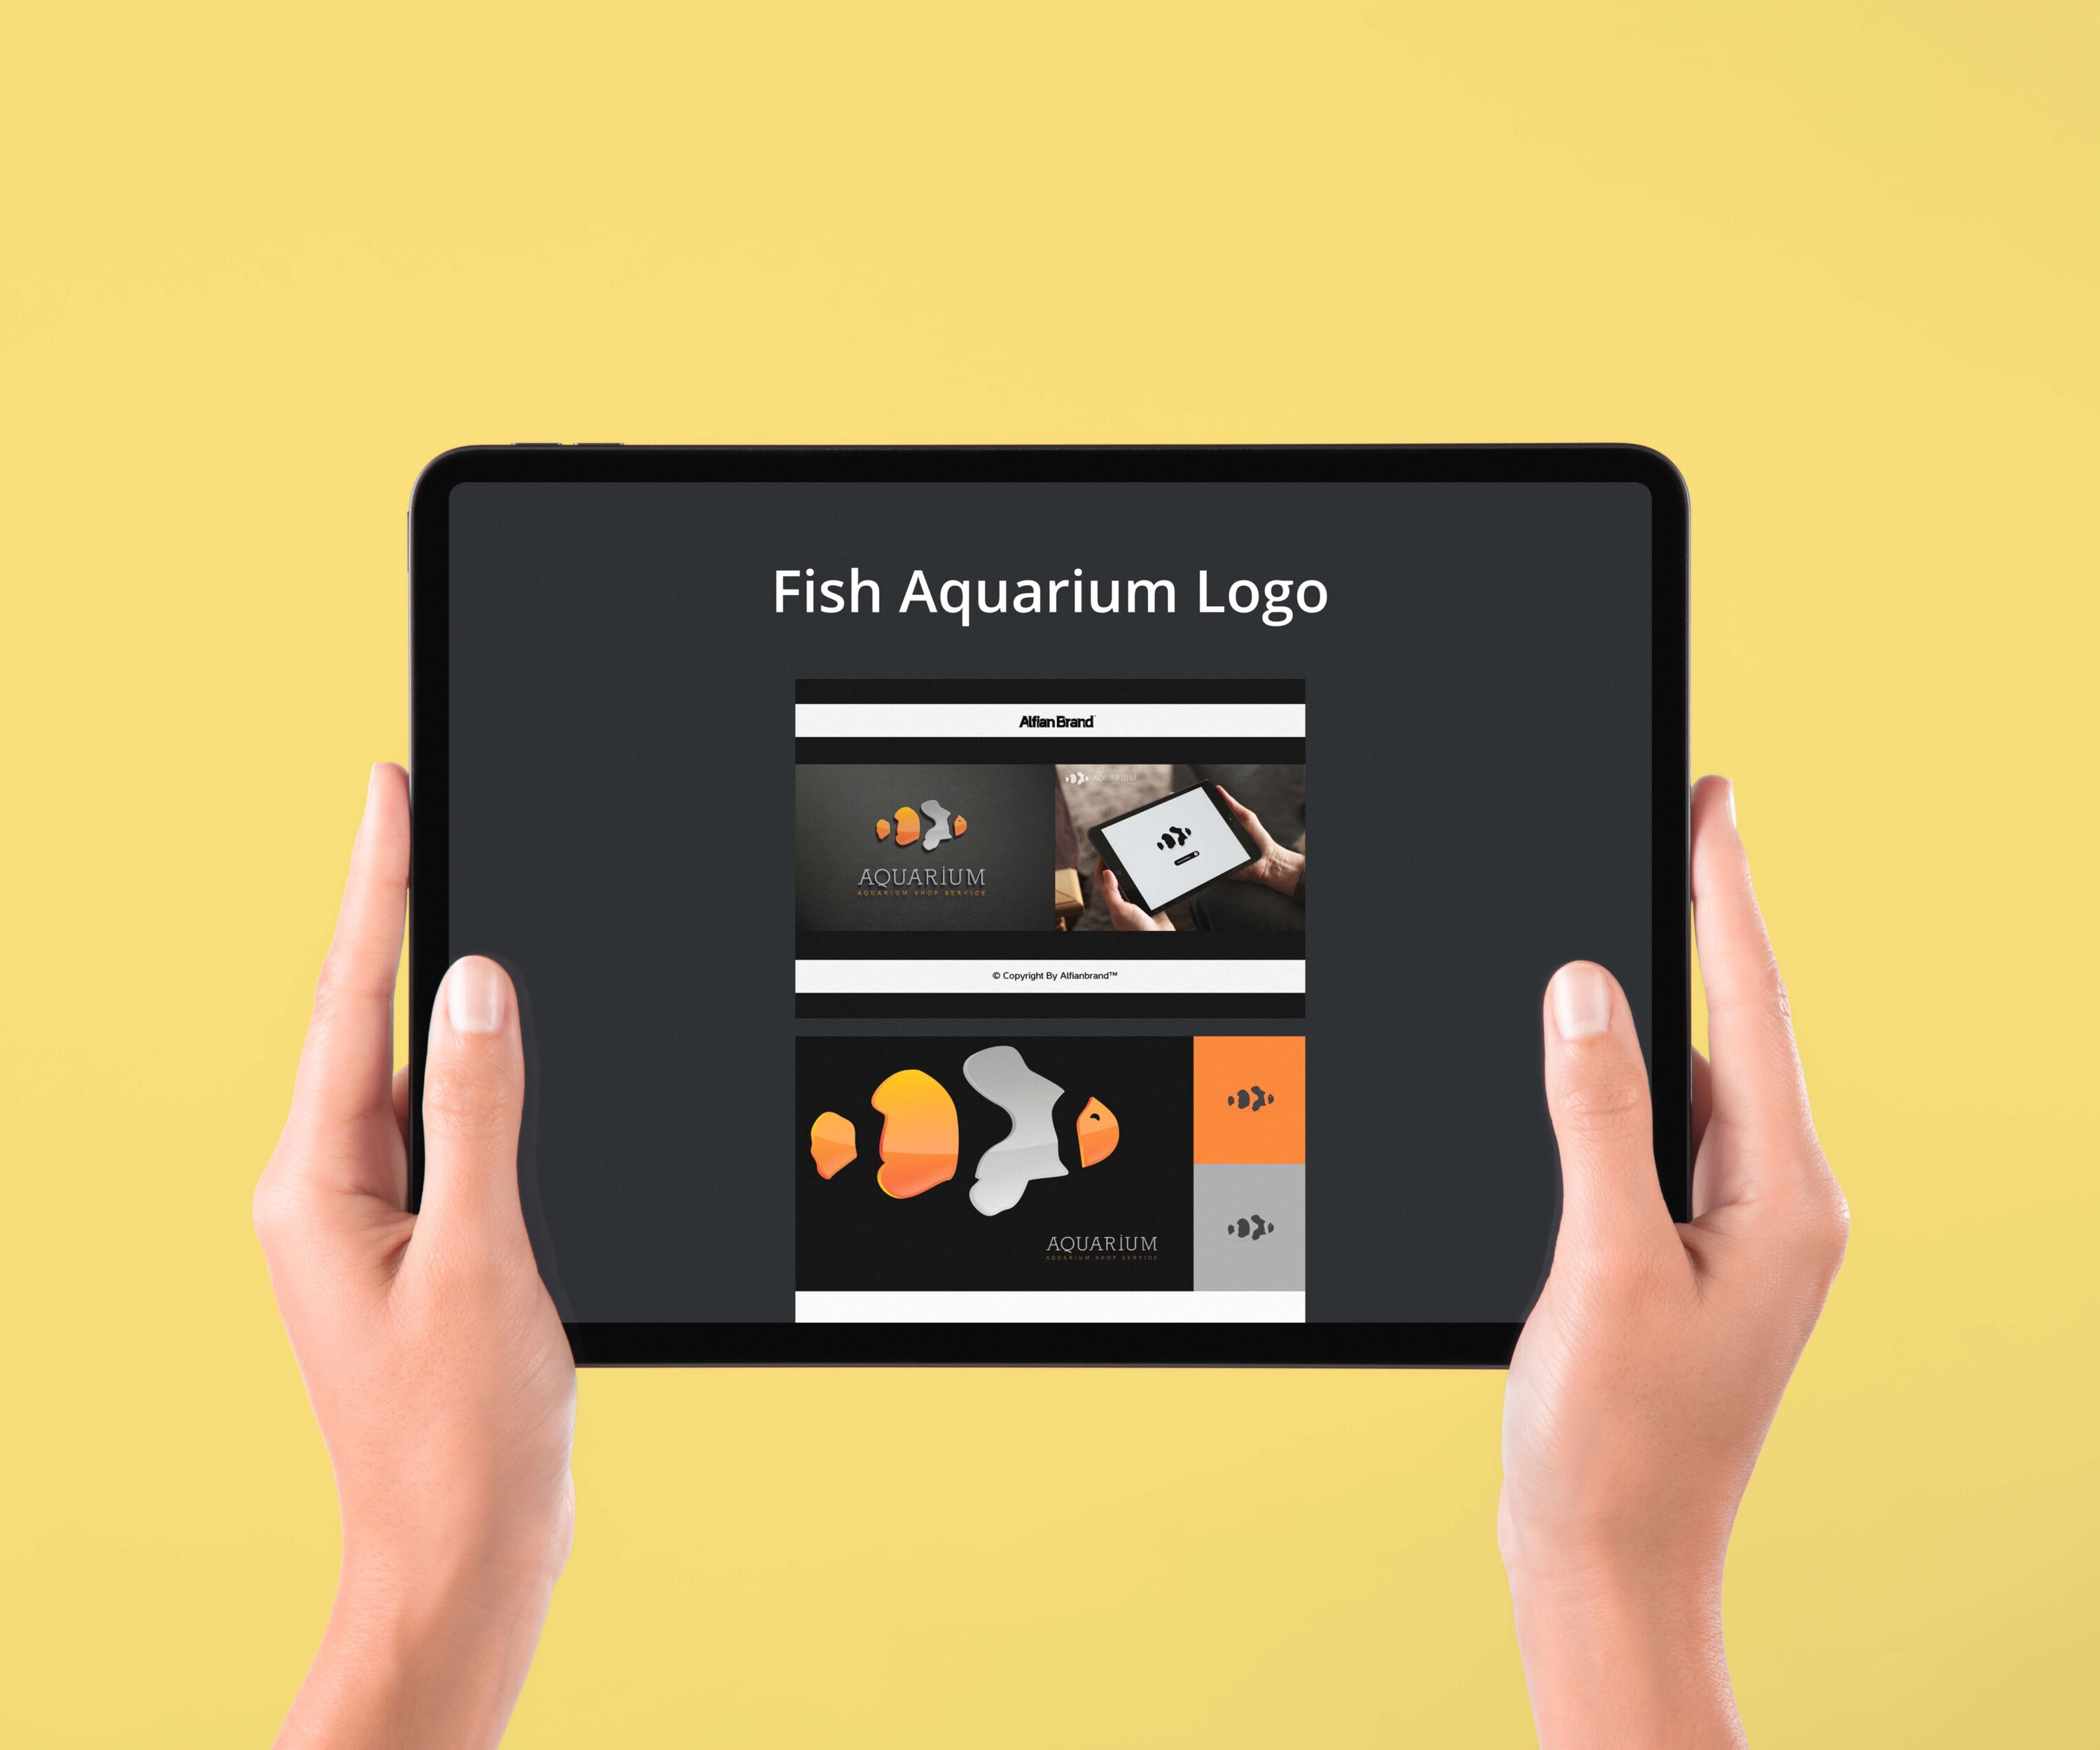 Fish Aquarium Logo - tablet.